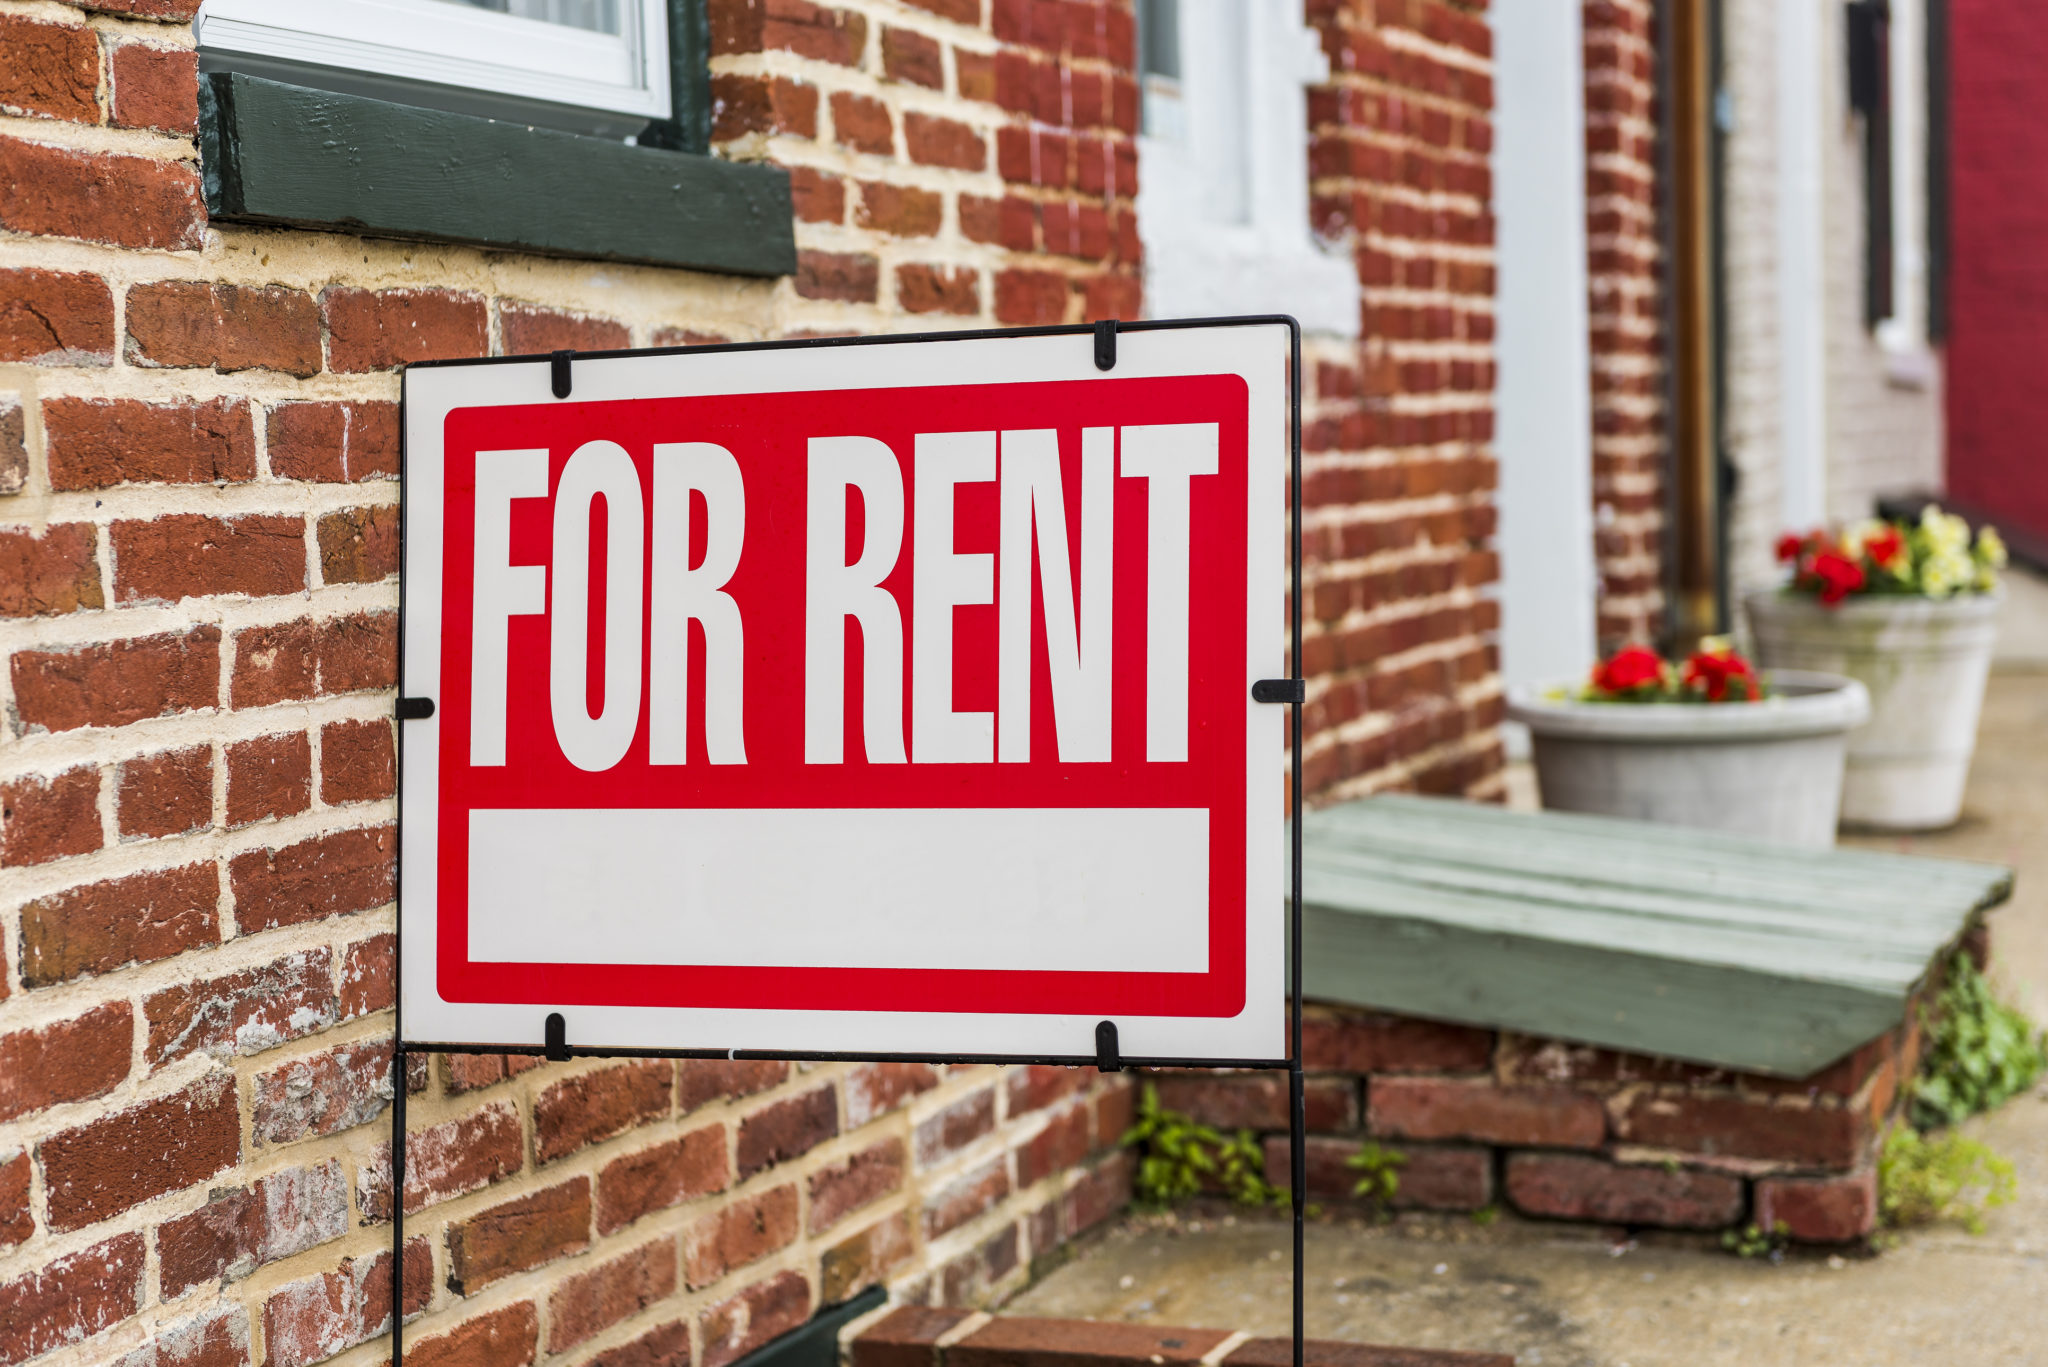 Costa-Hawkins Rental Housing Act repeal